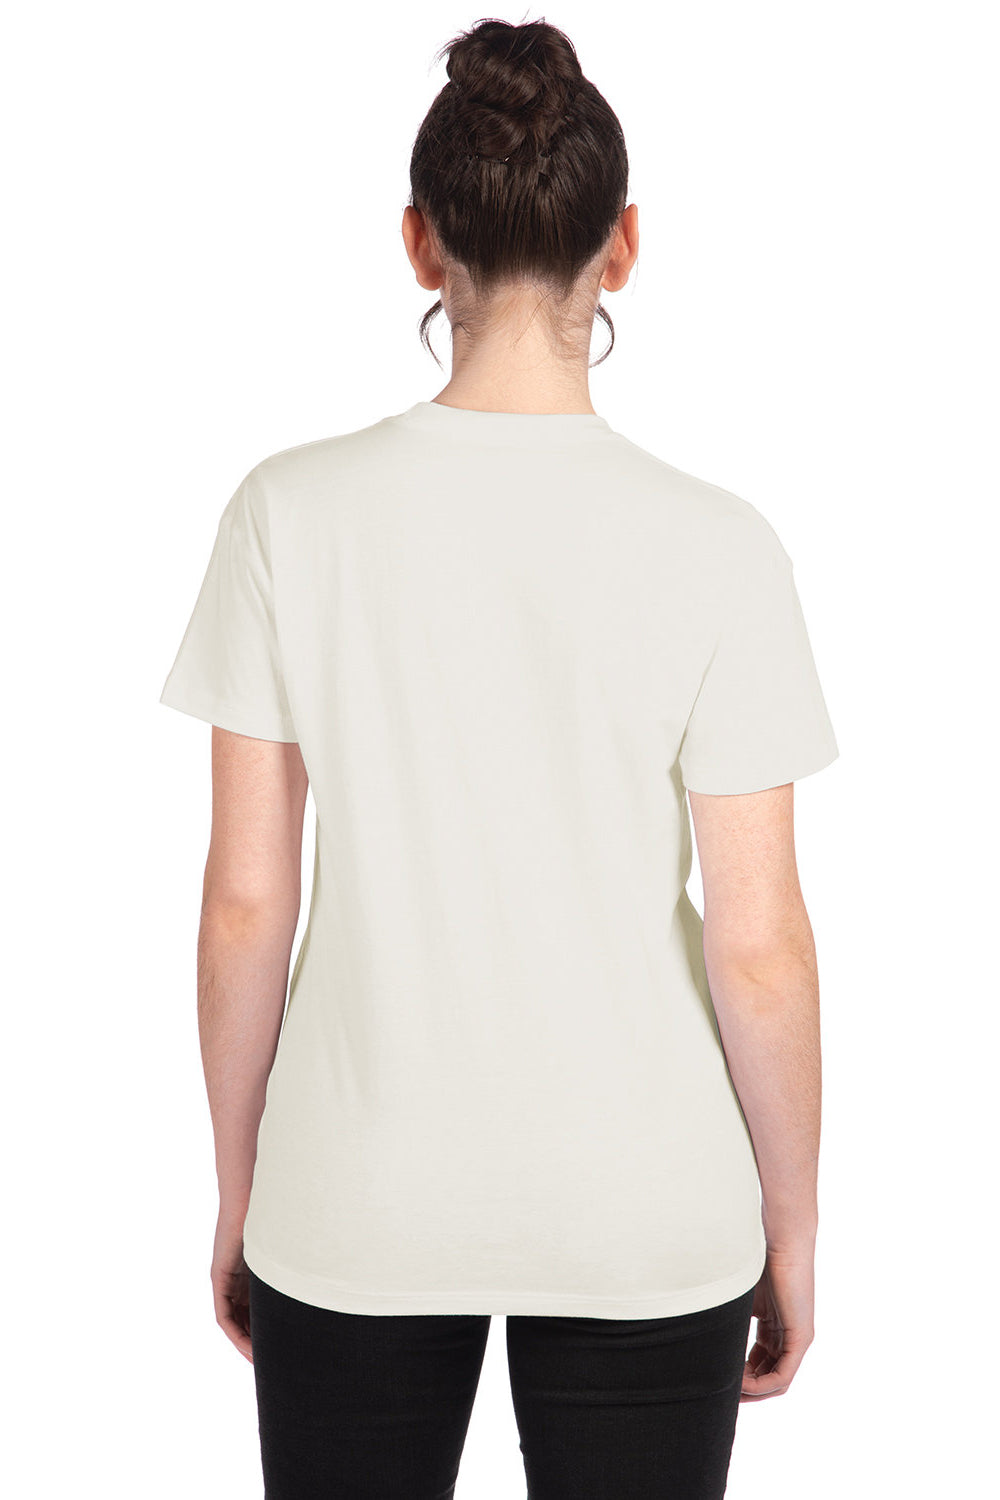 Next Level 3910NL Womens Relaxed Short Sleeve Crewneck T-Shirt White Back